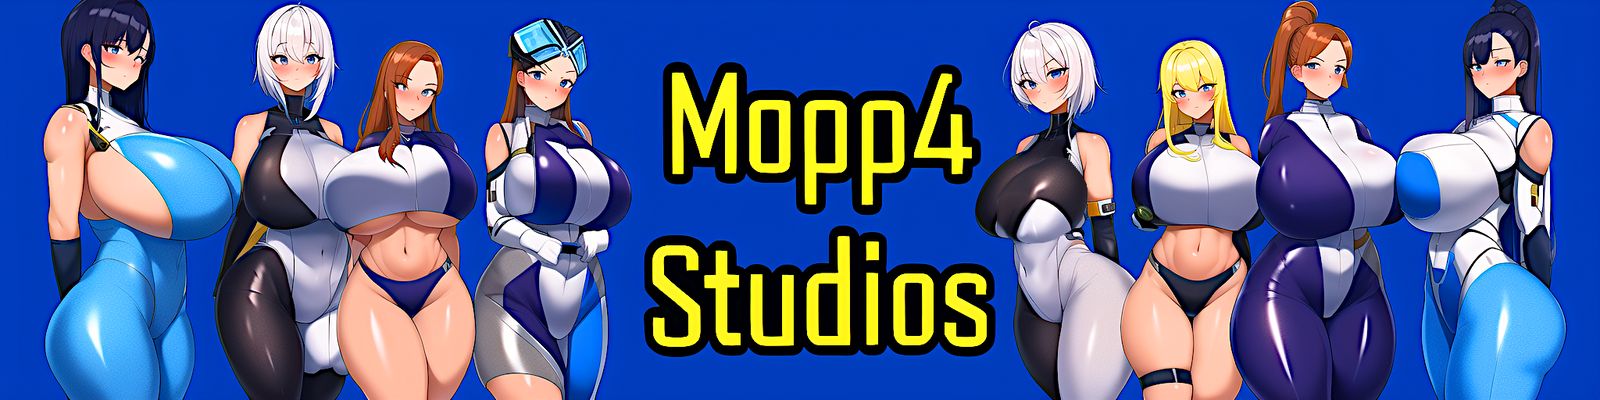 Mopp4Studios Games Adult xxx Game Download